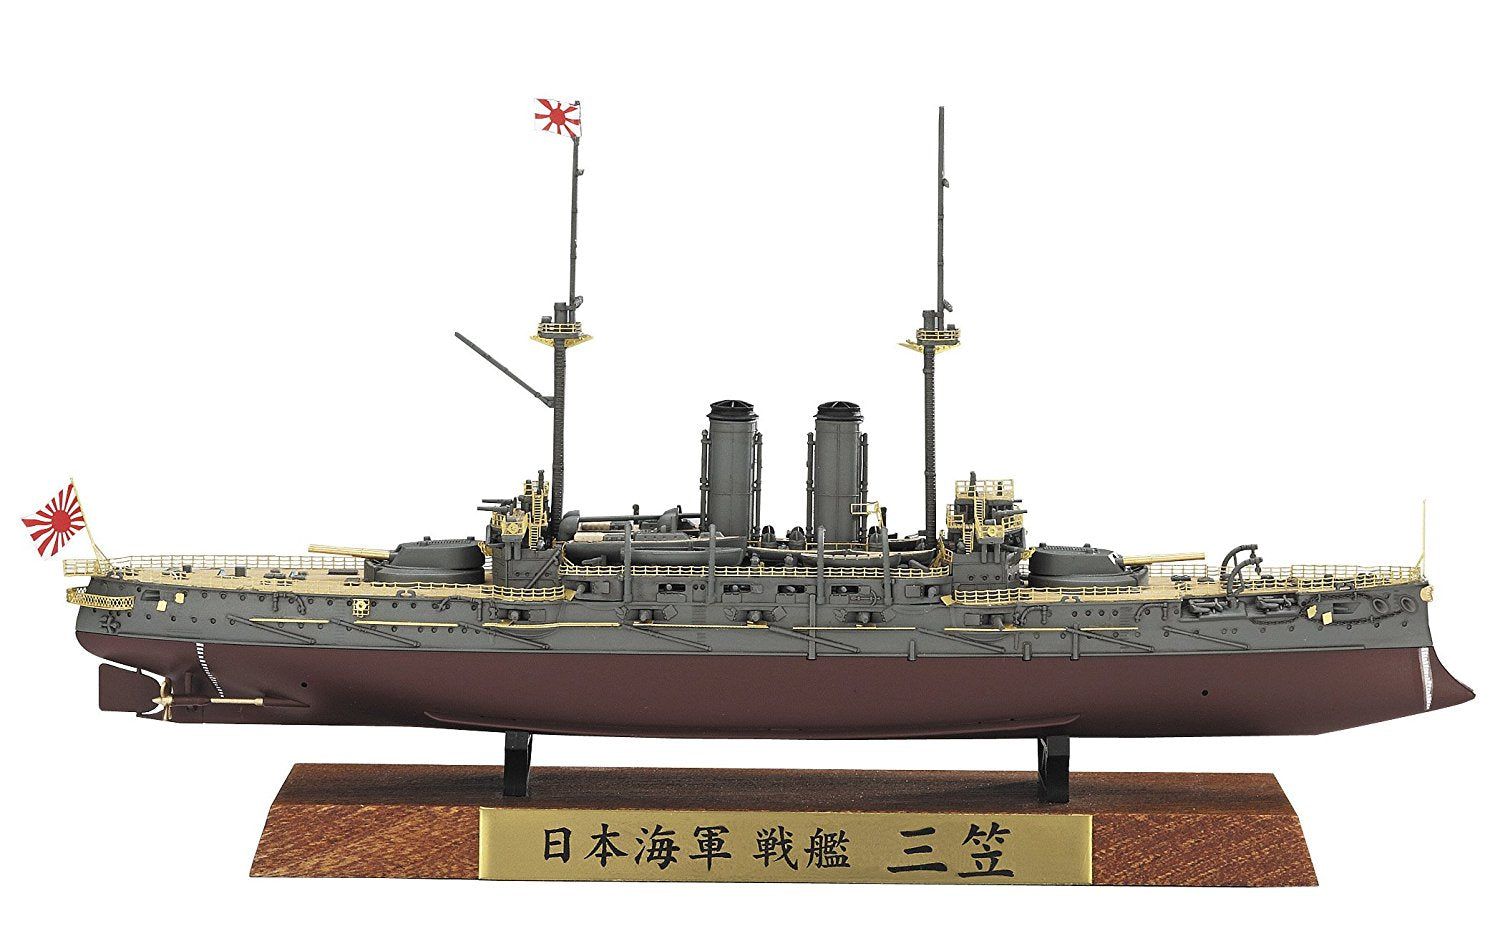 Hasegawa IJN Battleship Mikasa Full Hull Special - BanzaiHobby